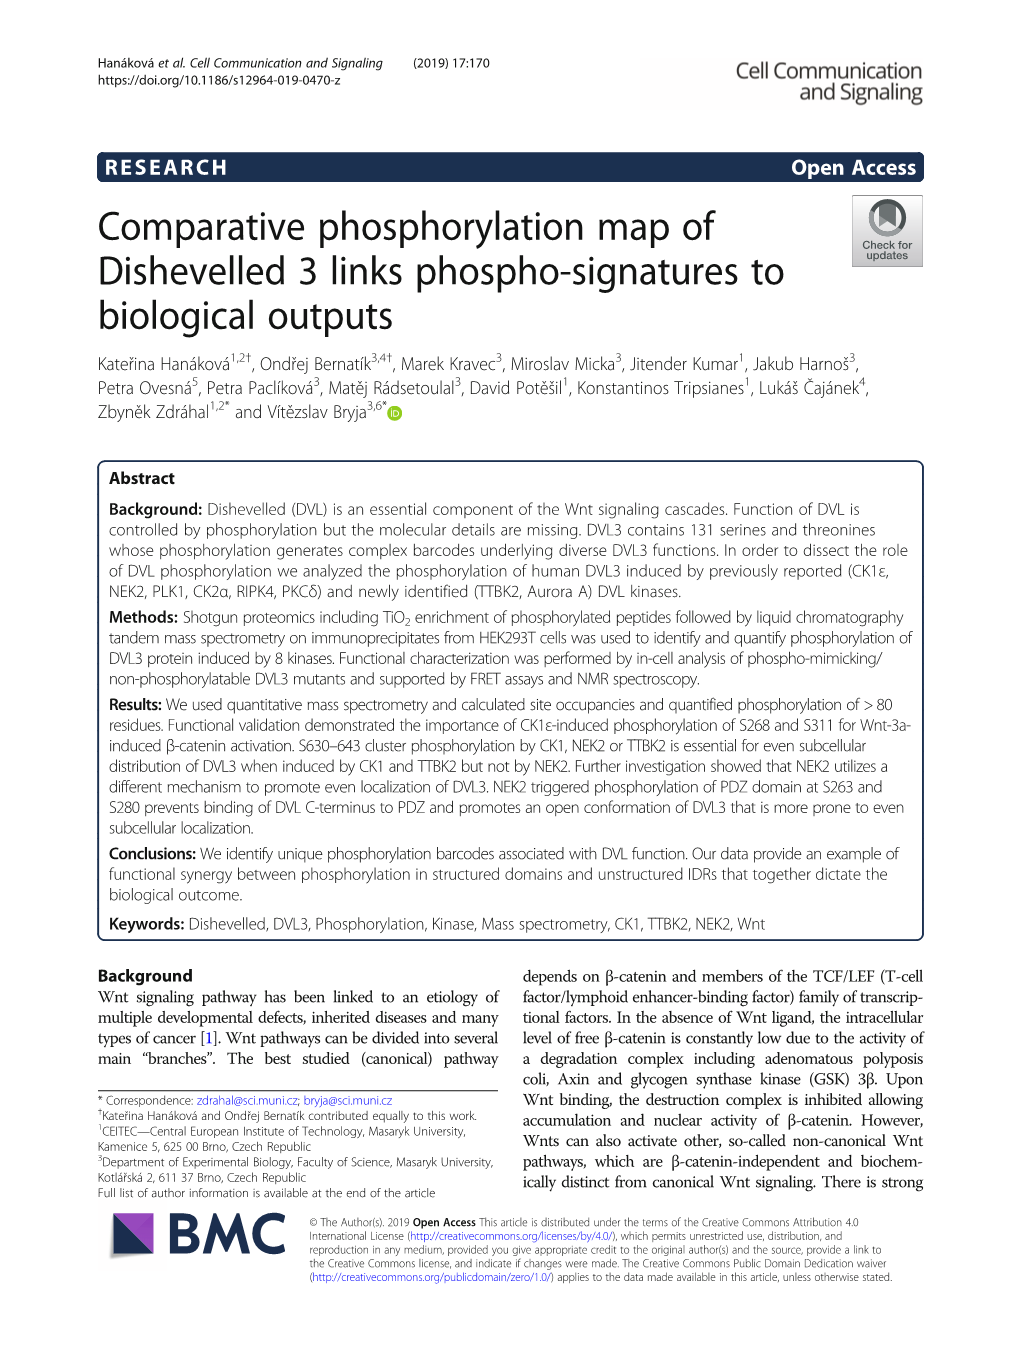 Comparative Phosphorylation Map of Dishevelled 3 Links Phospho